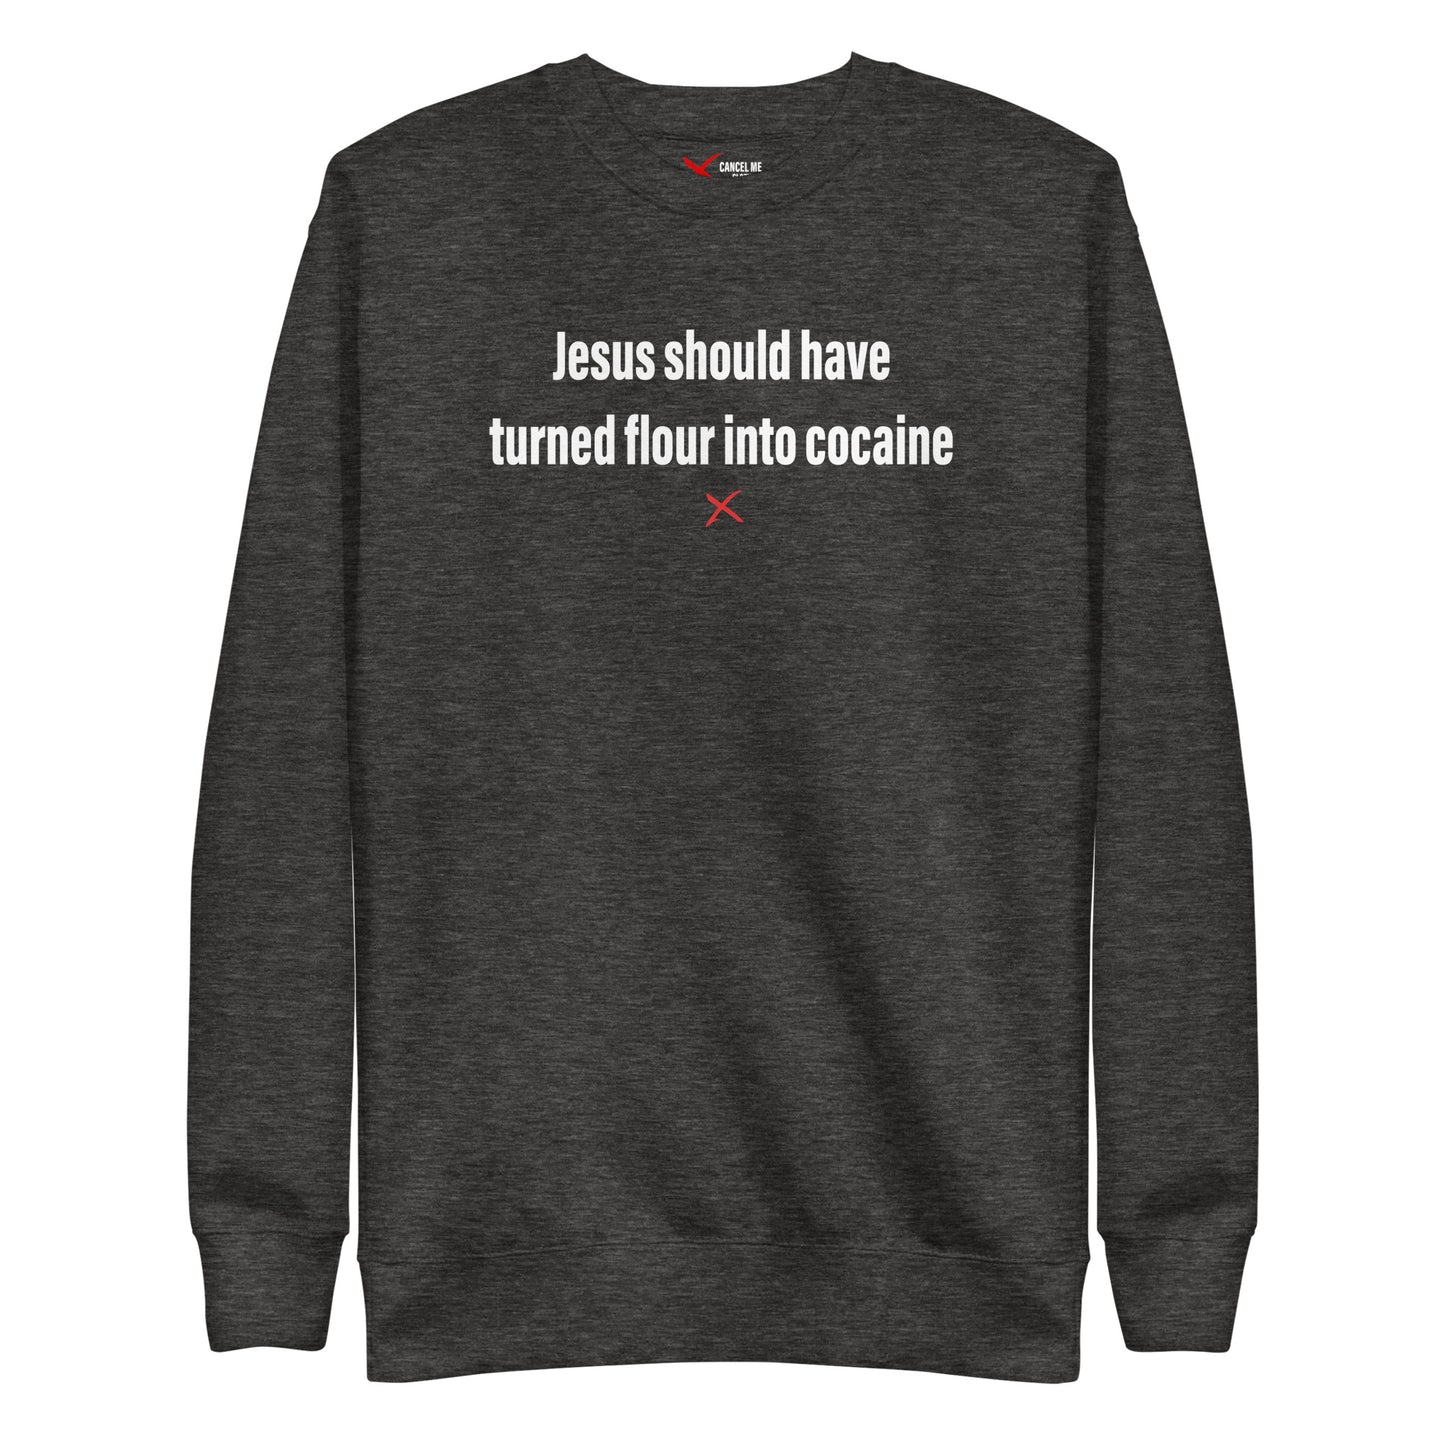 Jesus should have turned flour into cocaine - Sweatshirt